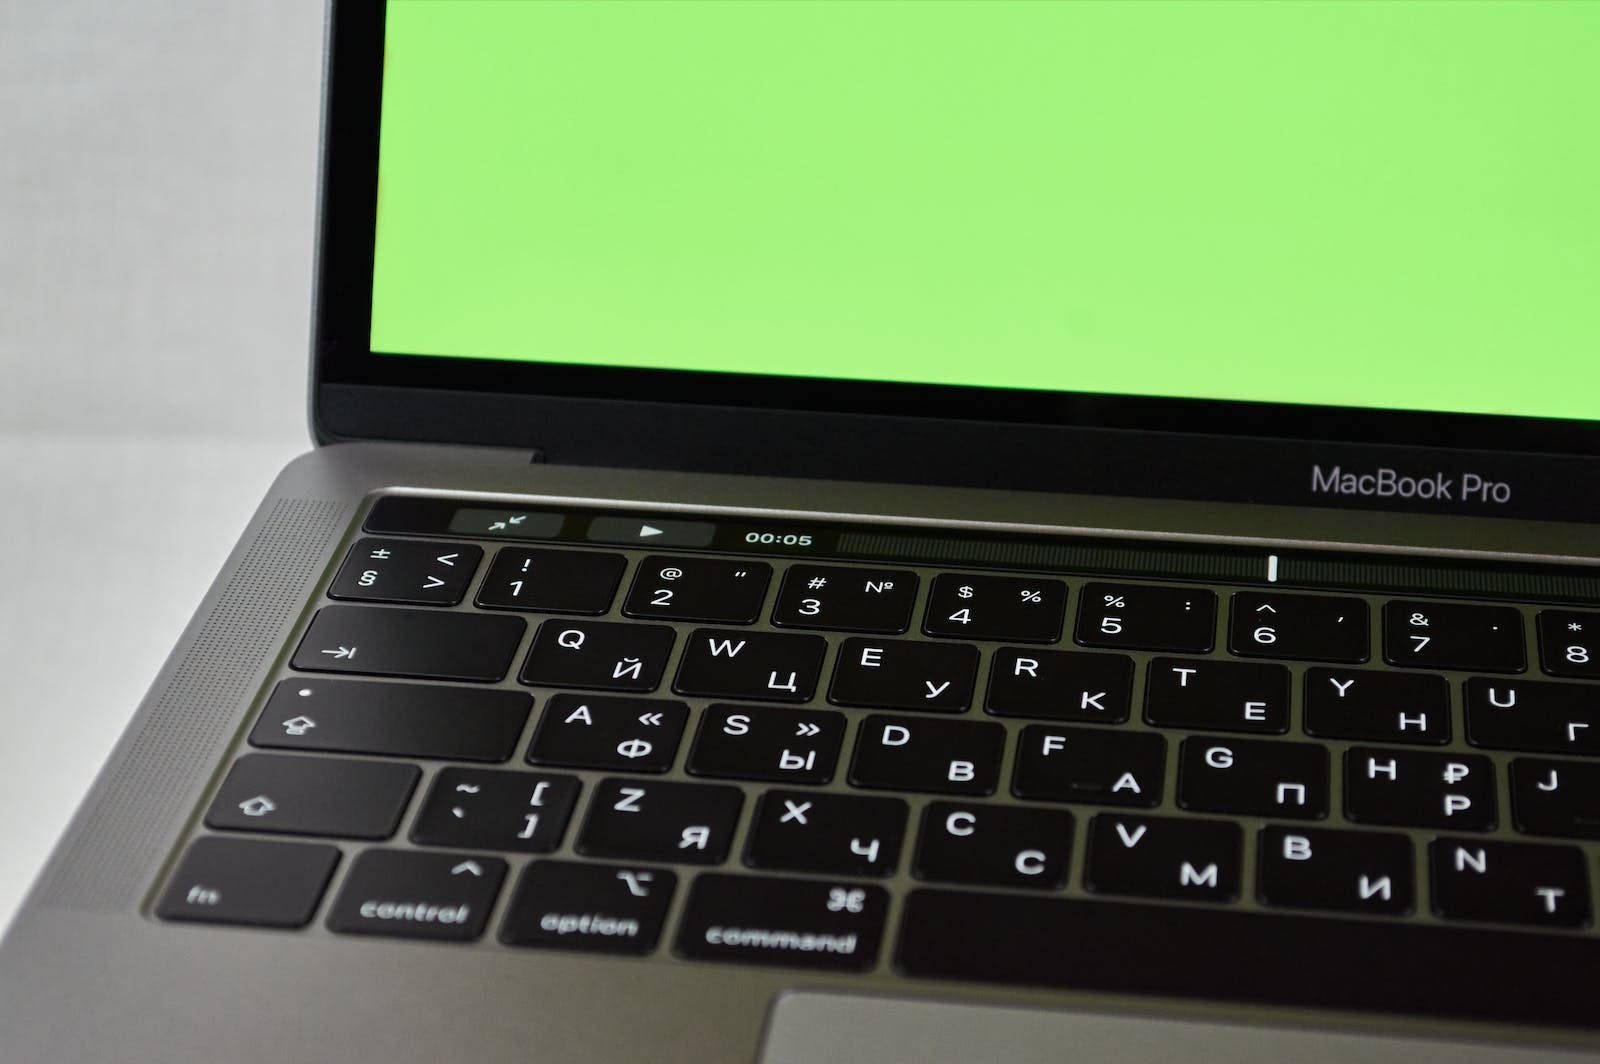 Macbook On A Green Screen